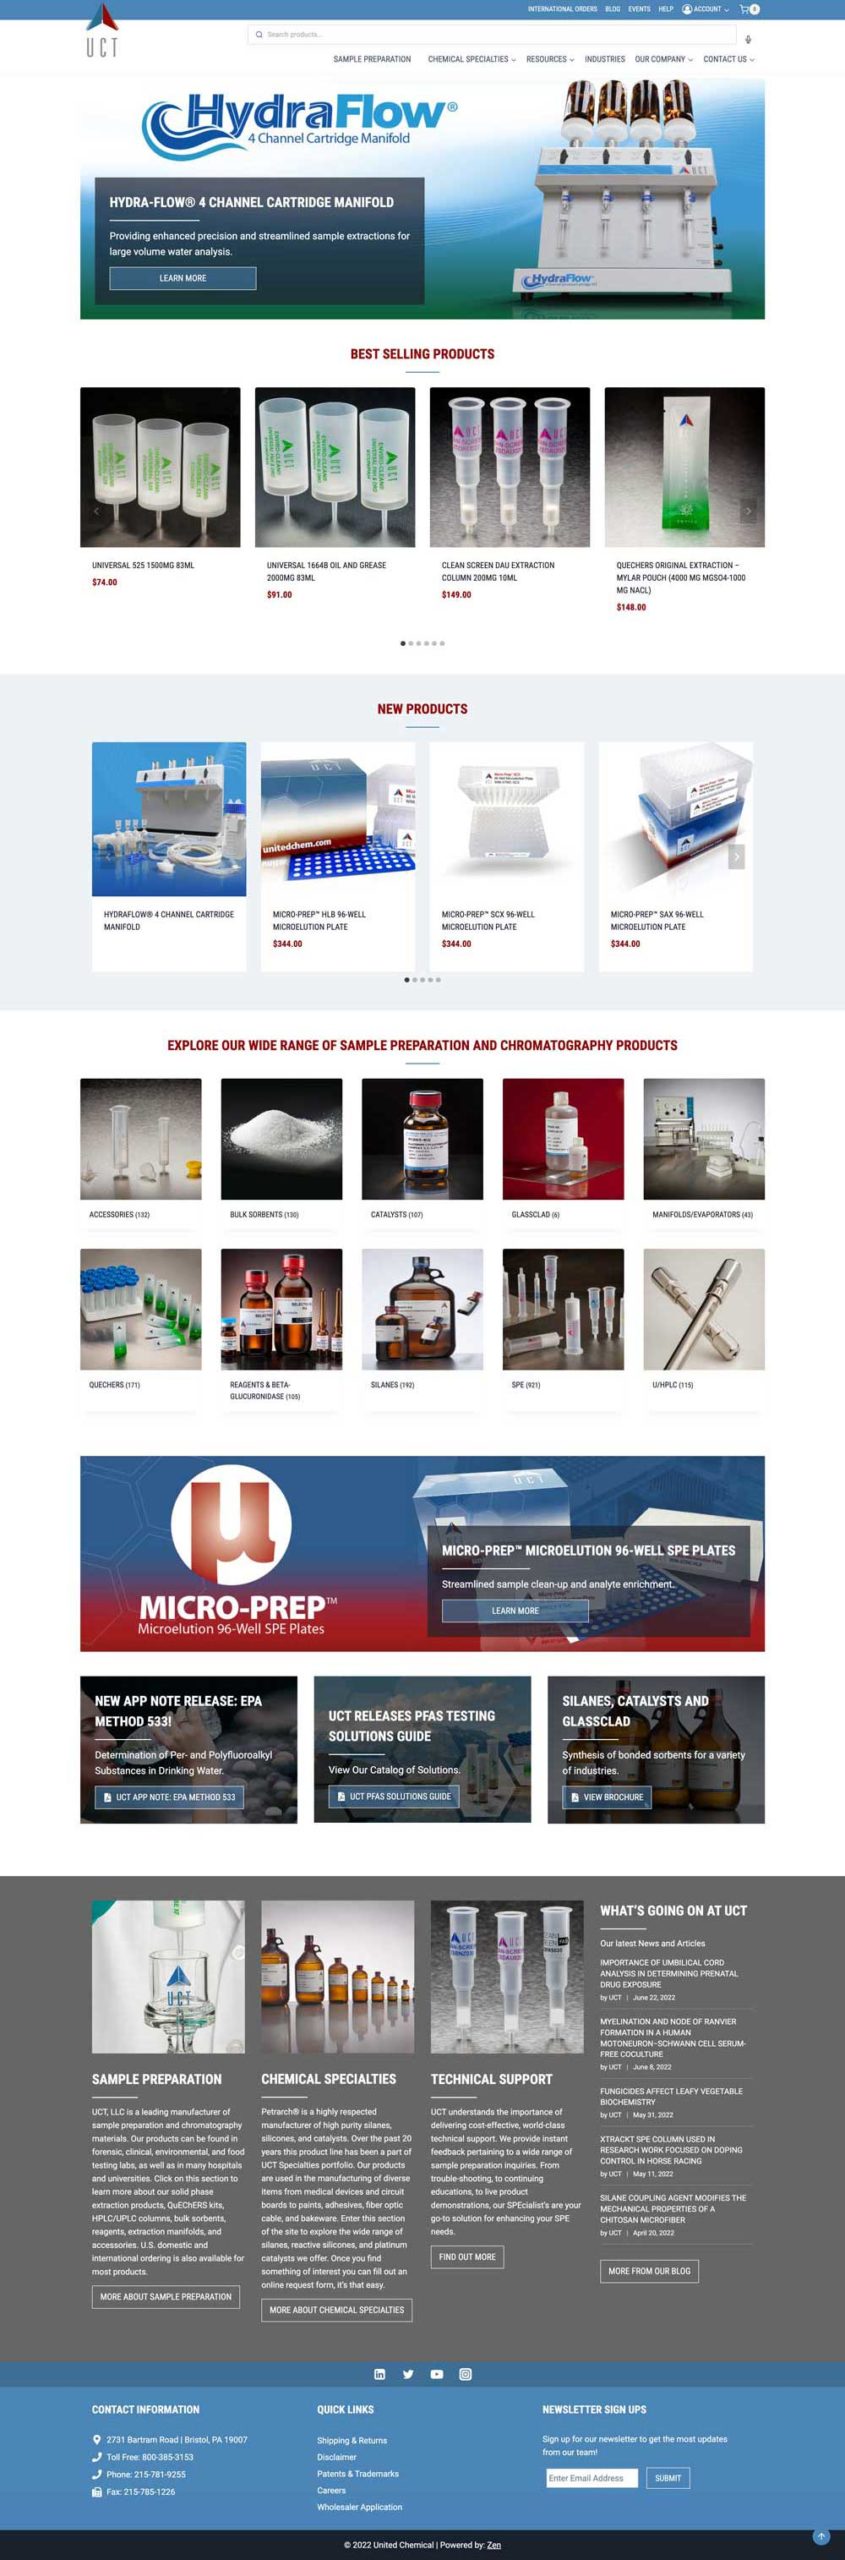 Homepage Mockup